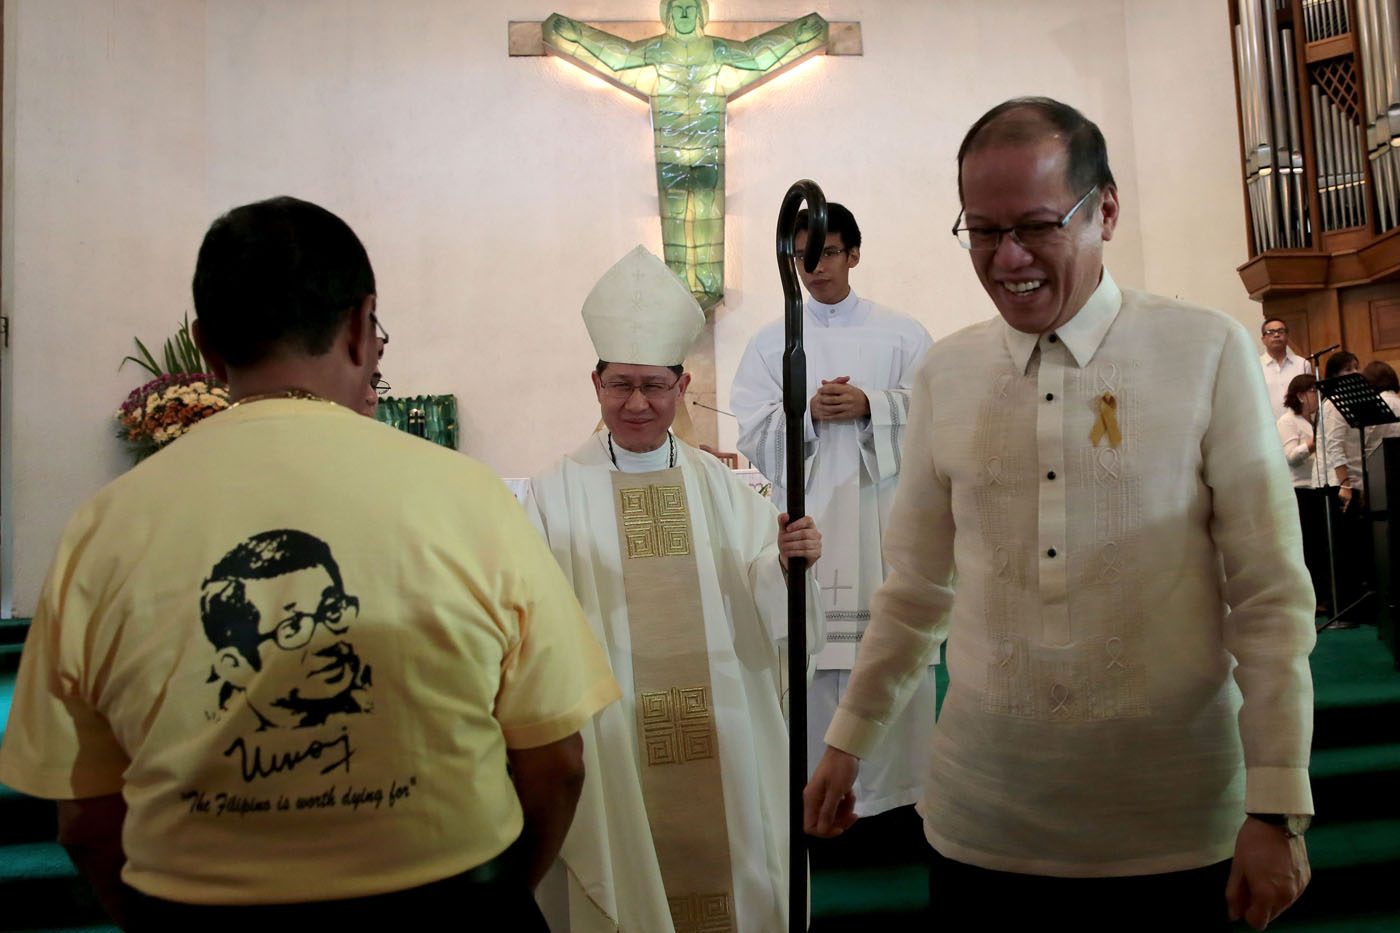 Did heaven send Aquino a message?